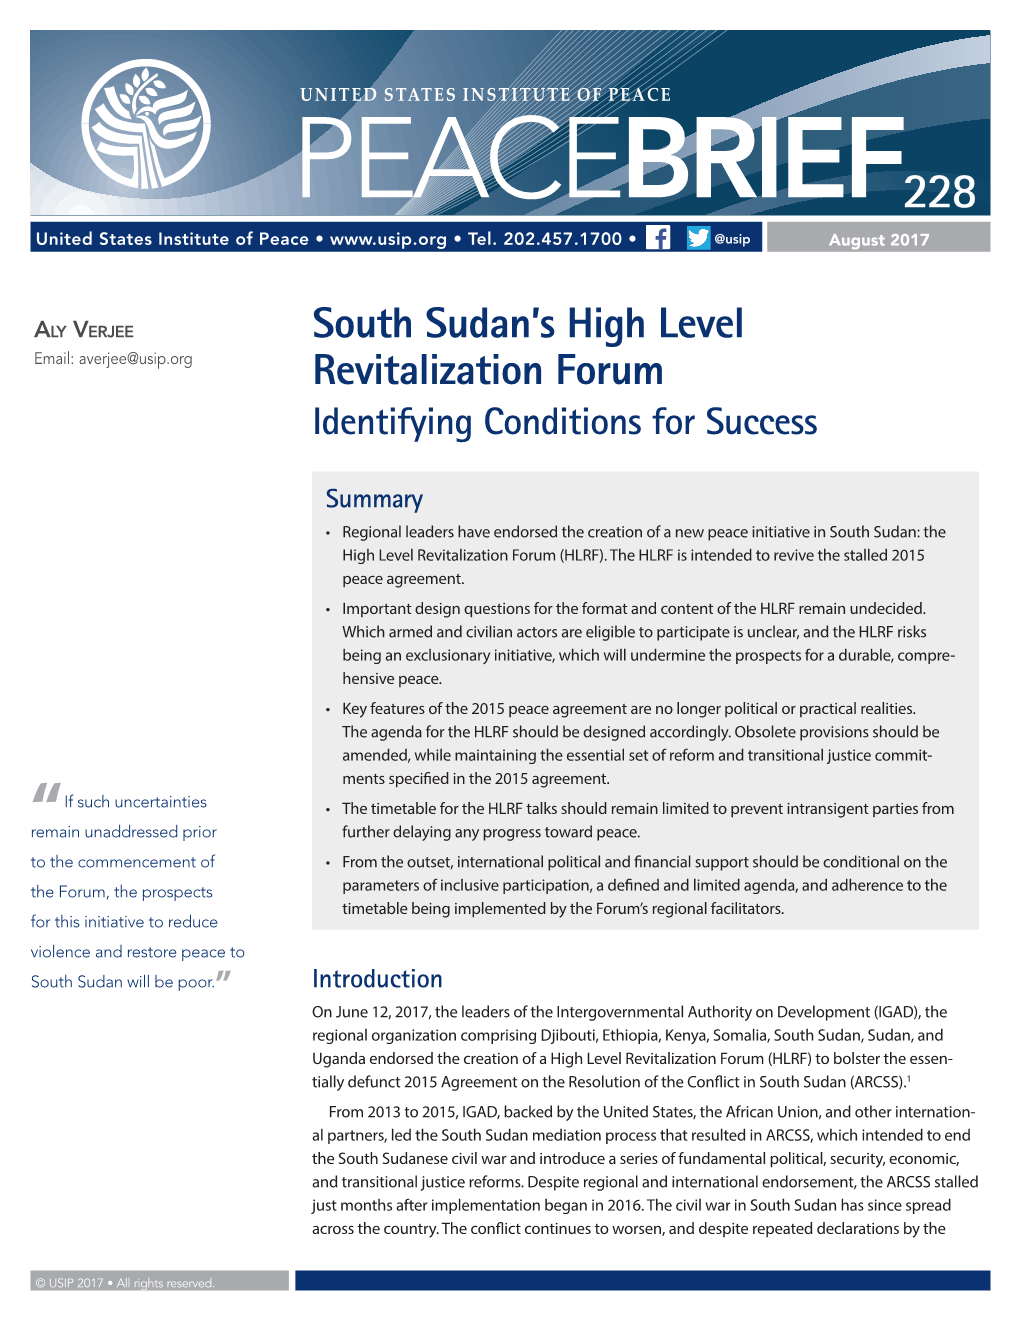 South Sudan's High Level Revitalization Forum